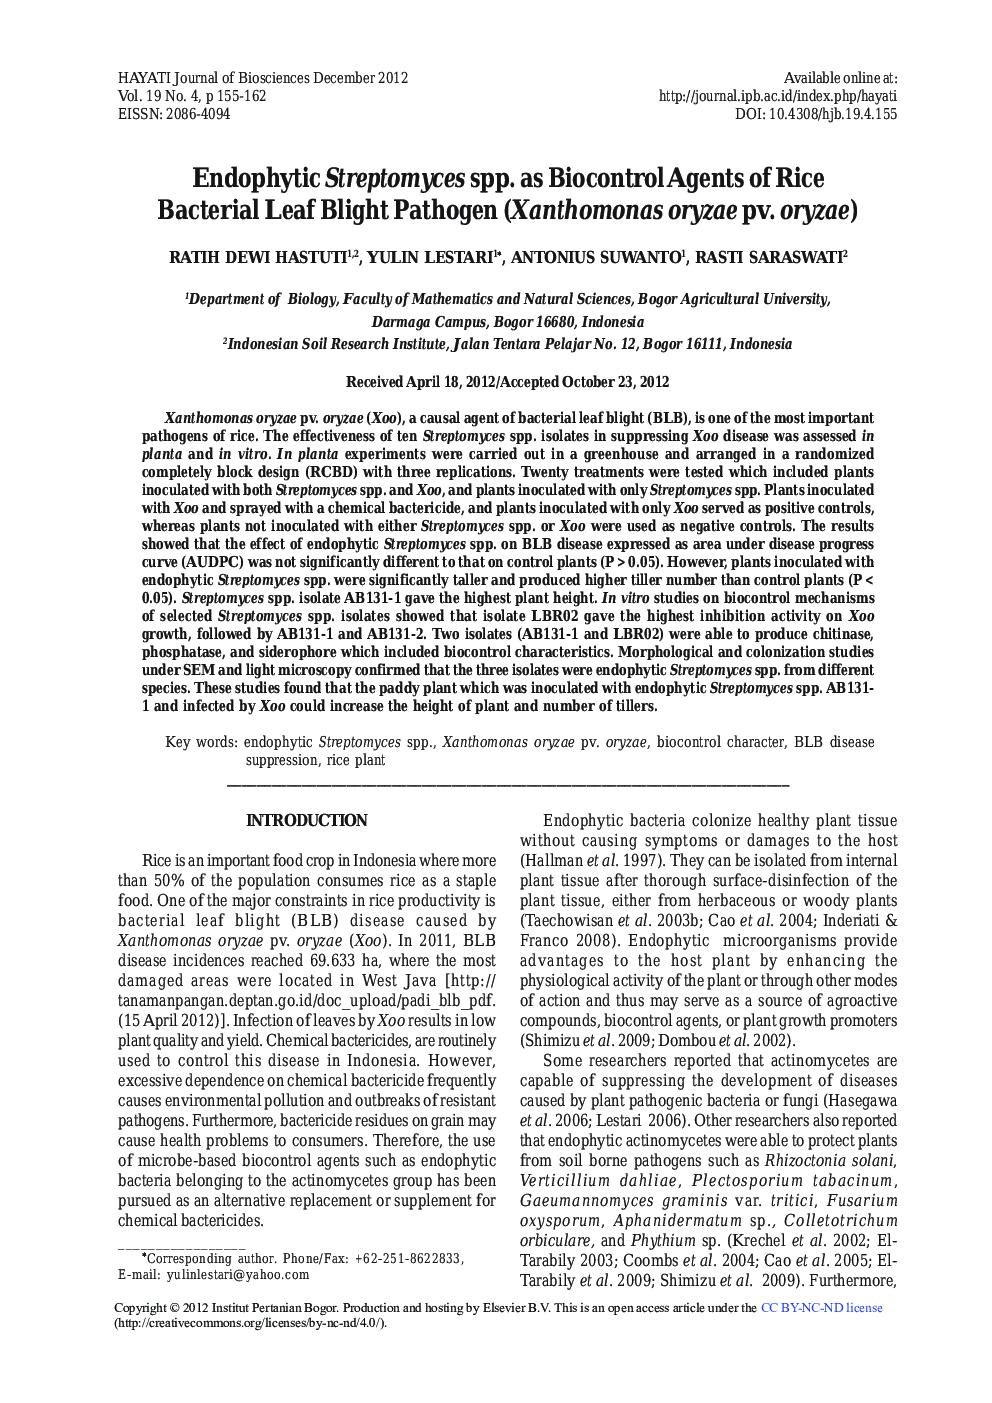 Endophytic Streptomyces spp. as Biocontrol Agents of Rice Bacterial Leaf Blight Pathogen (Xanthomonas oryzae pv. oryzae)